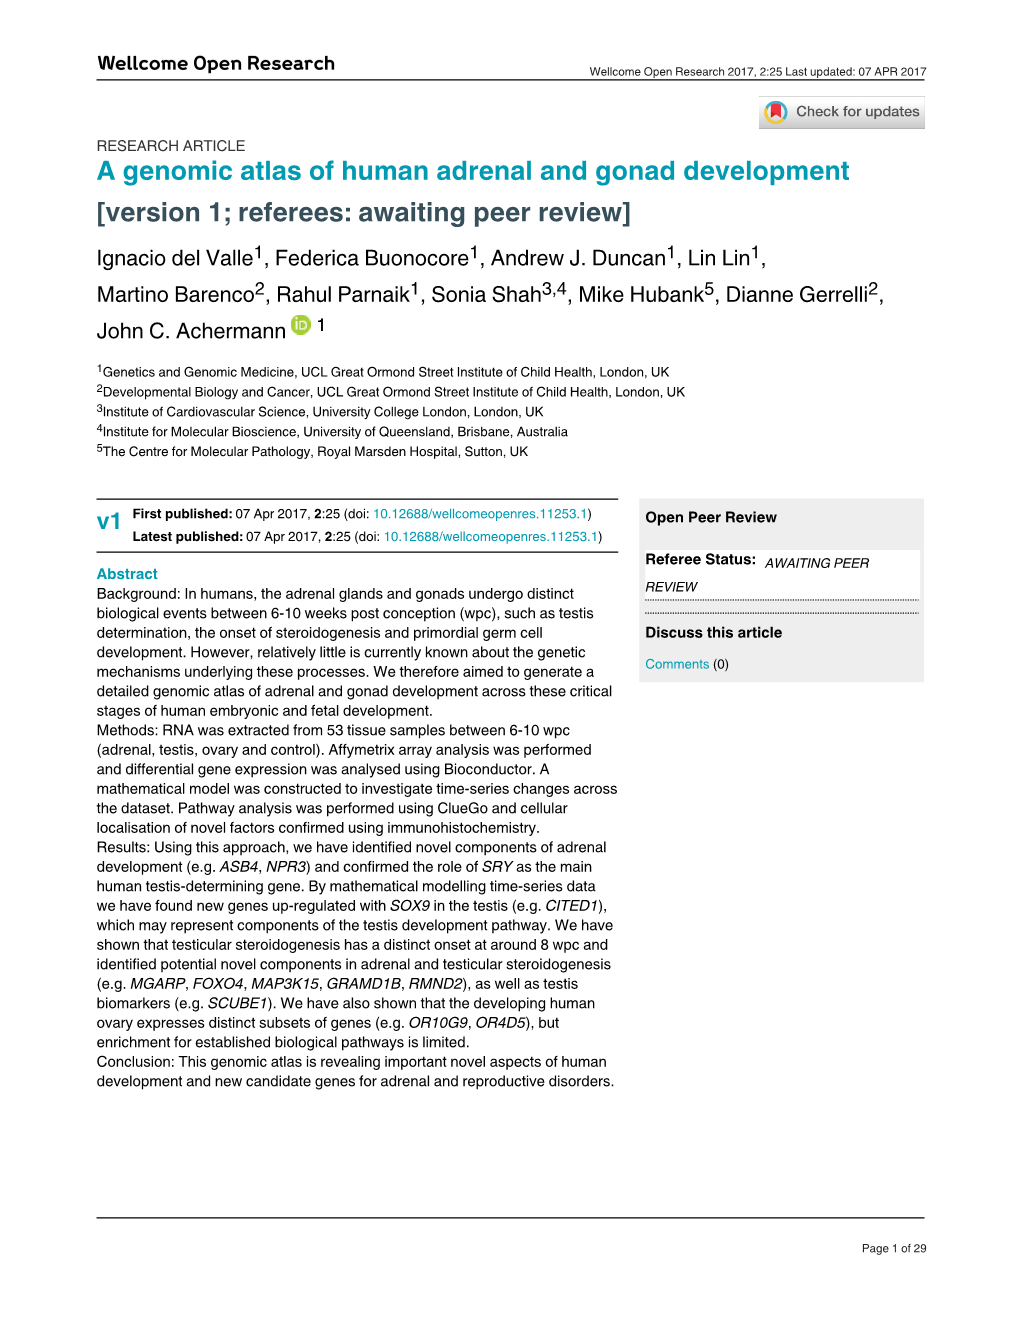 A Genomic Atlas of Human Adrenal and Gonad Development [Version 1; Referees: Awaiting Peer Review] Ignacio Del Valle1, Federica Buonocore1, Andrew J